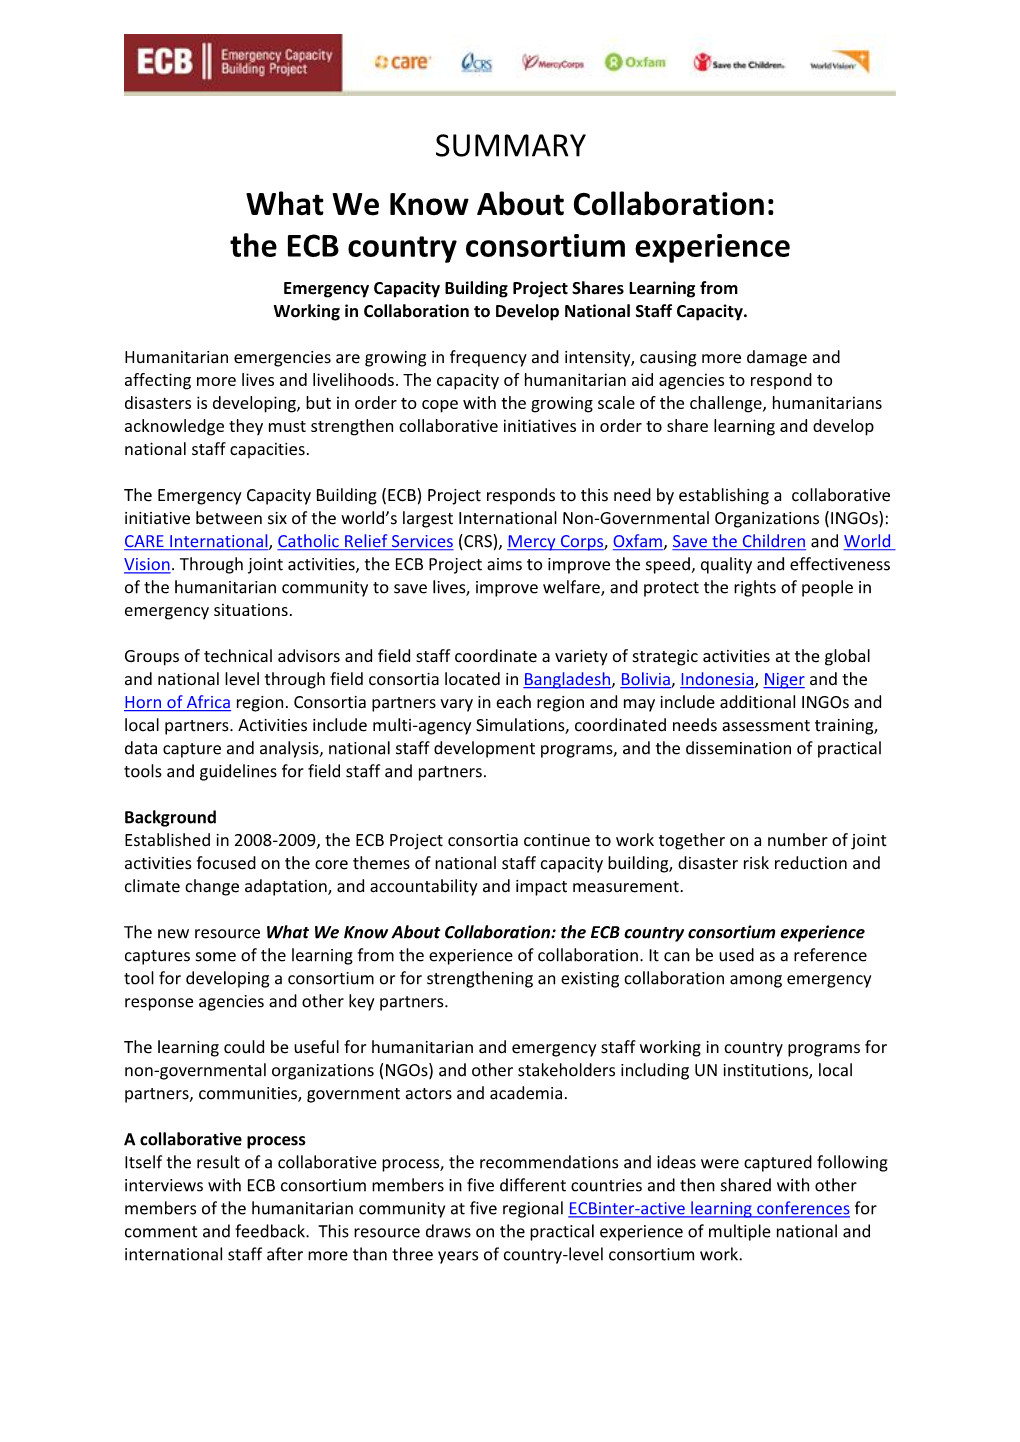 ECB Country Consortium Experience